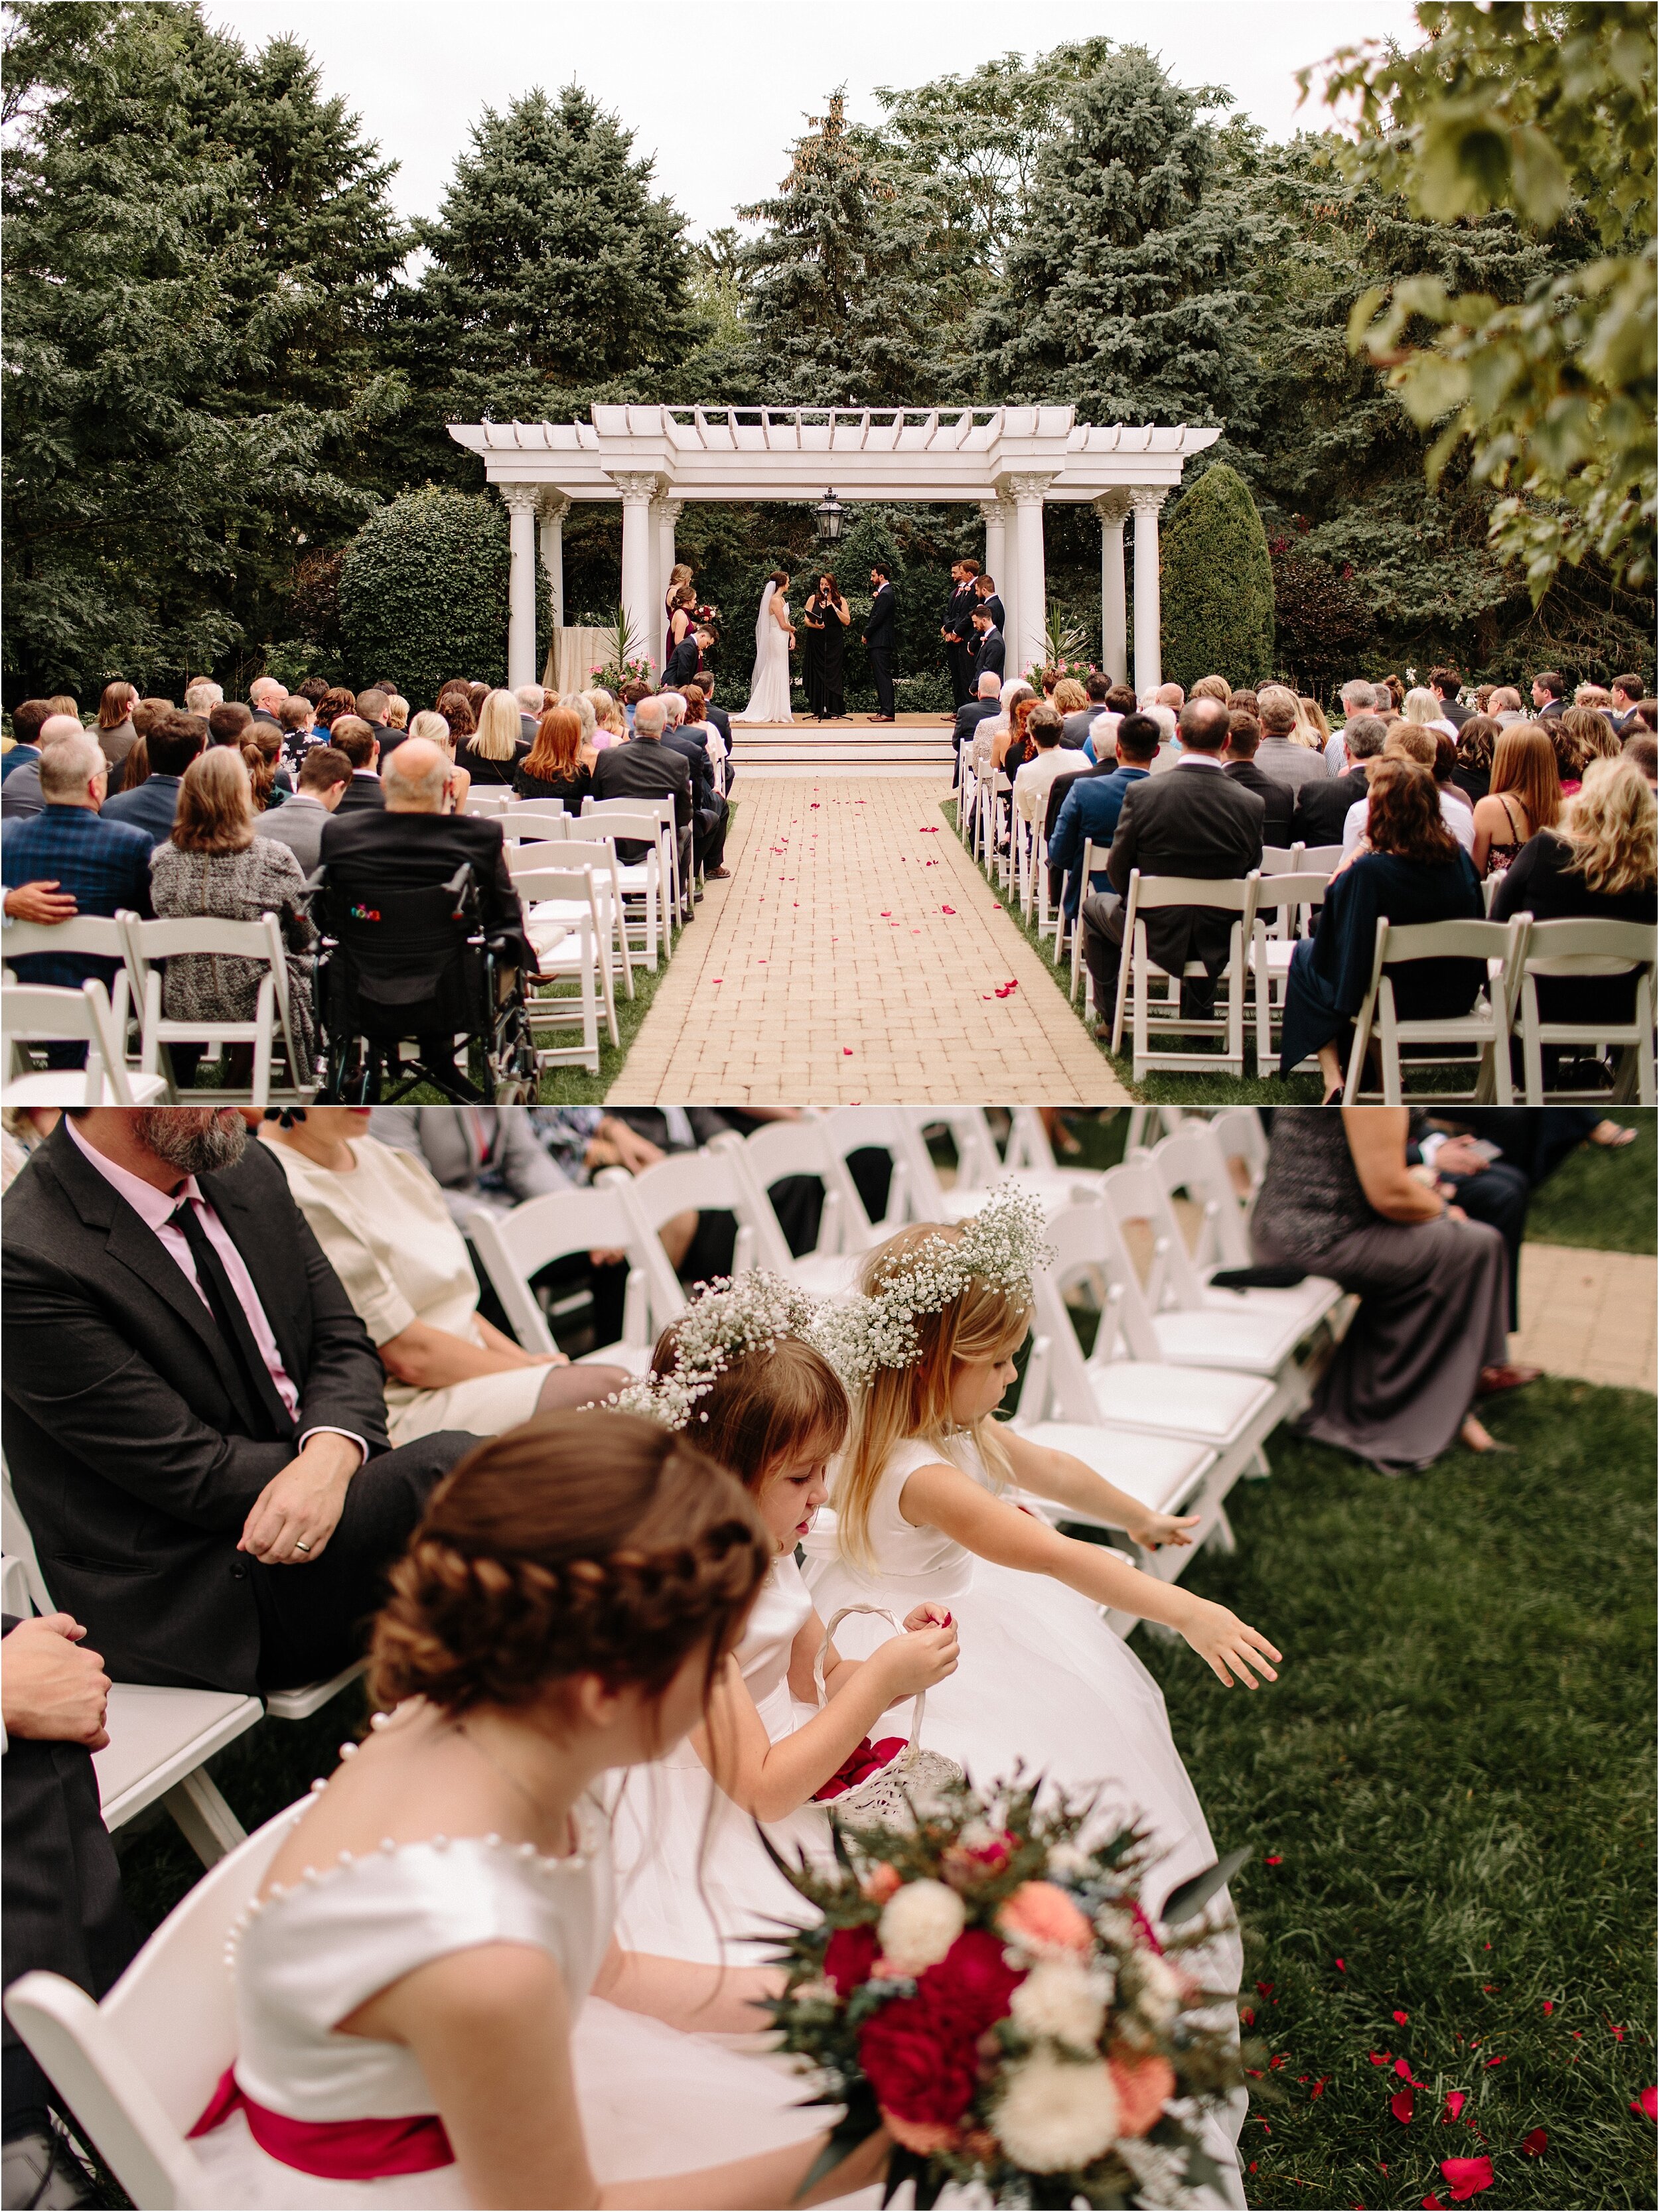 The Haley Mansion Joliet, IL Wedding